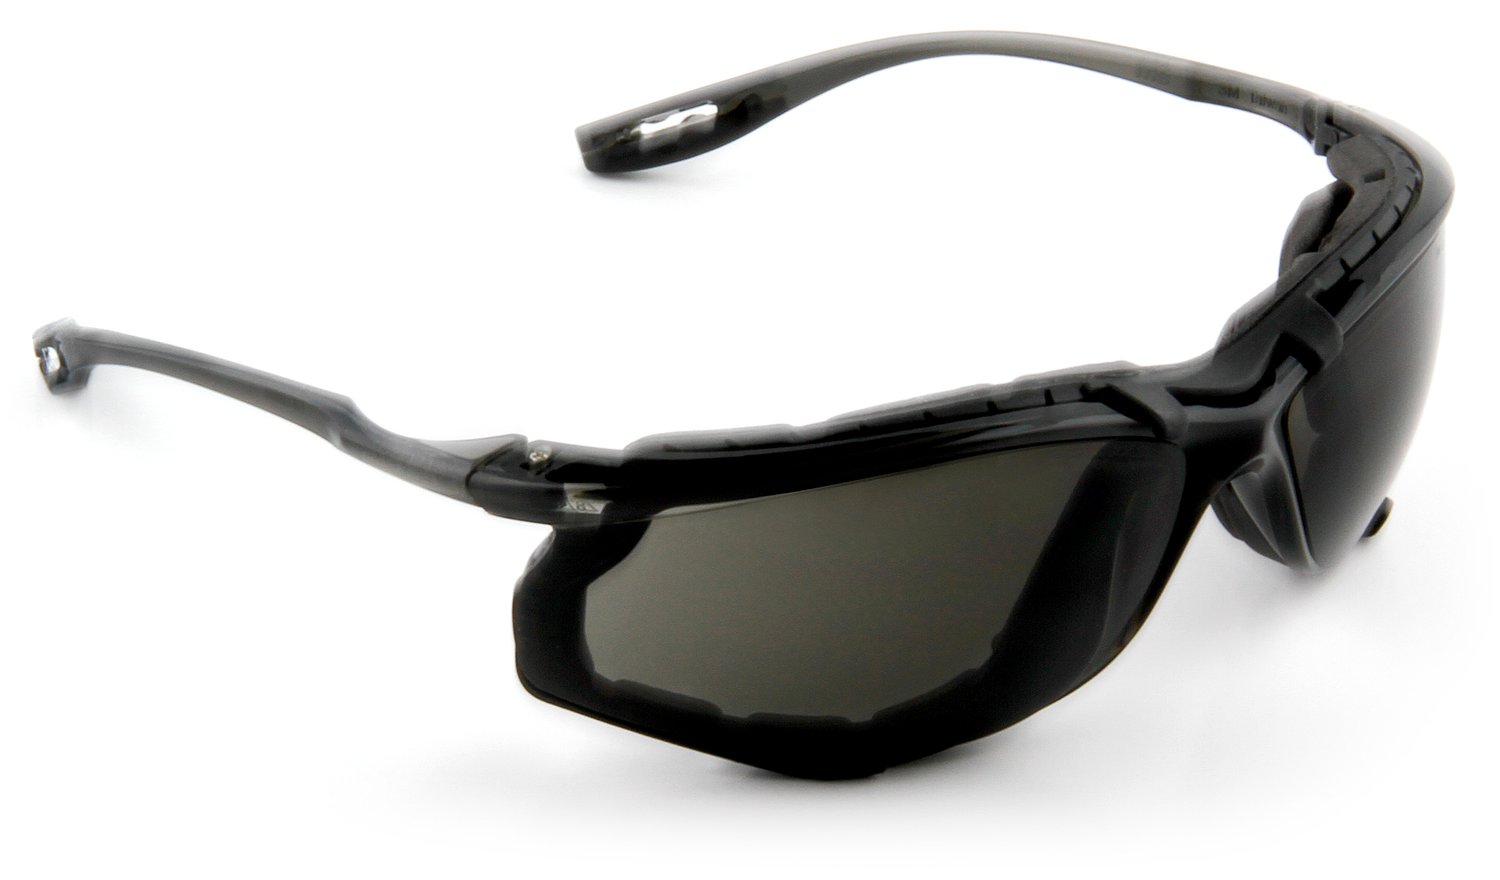 7000128260 - 3M Virtua CCS Protective Eyewear 11873-00000-20, with Foam Gasket,
GRAY Anti-Fog Lens, 20 EA/Case